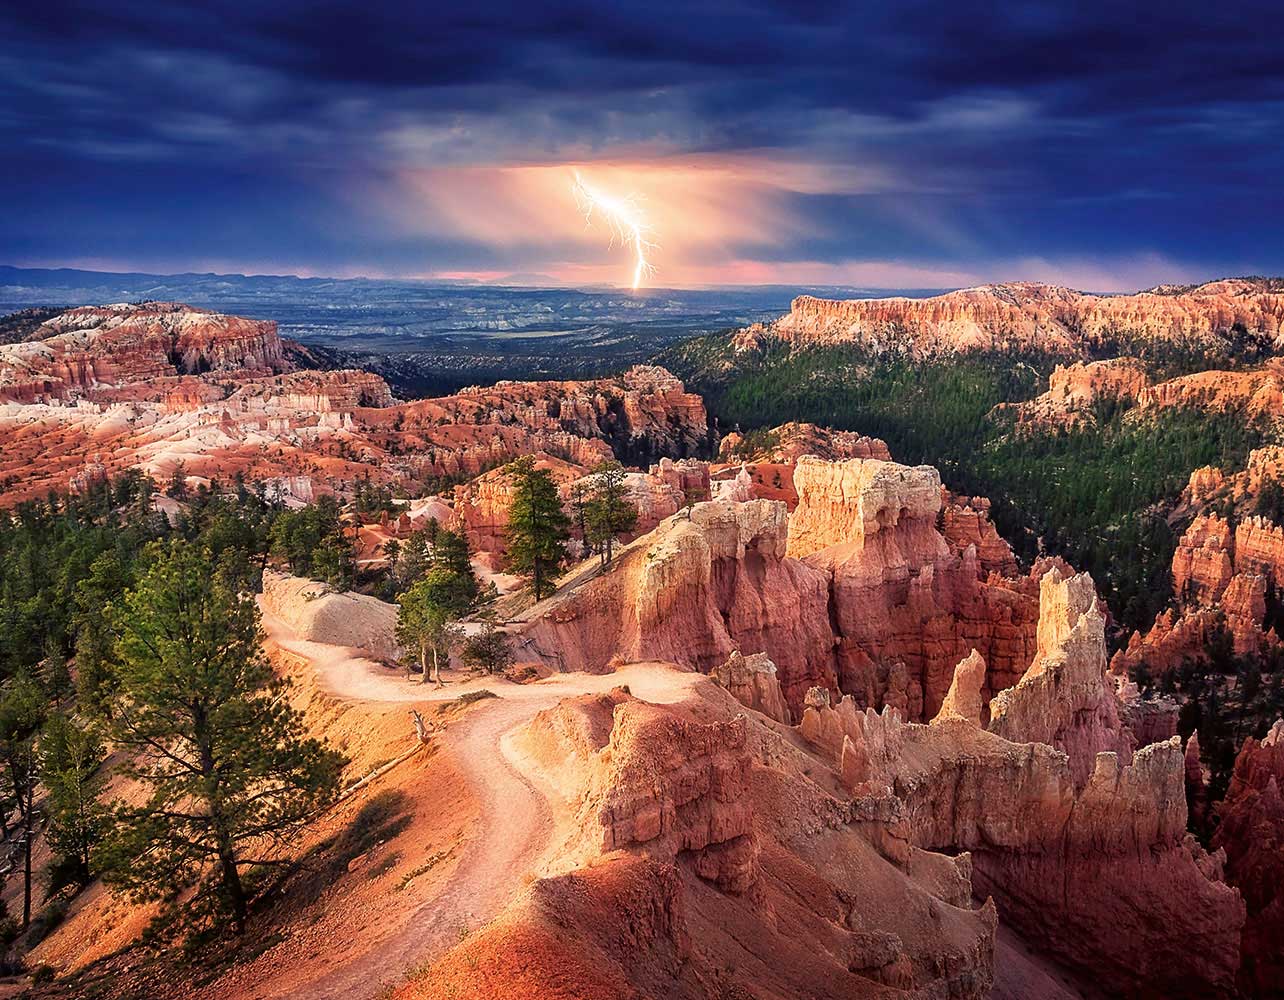 Fototapete kaufen online Lightning over Bryce Canyon WG